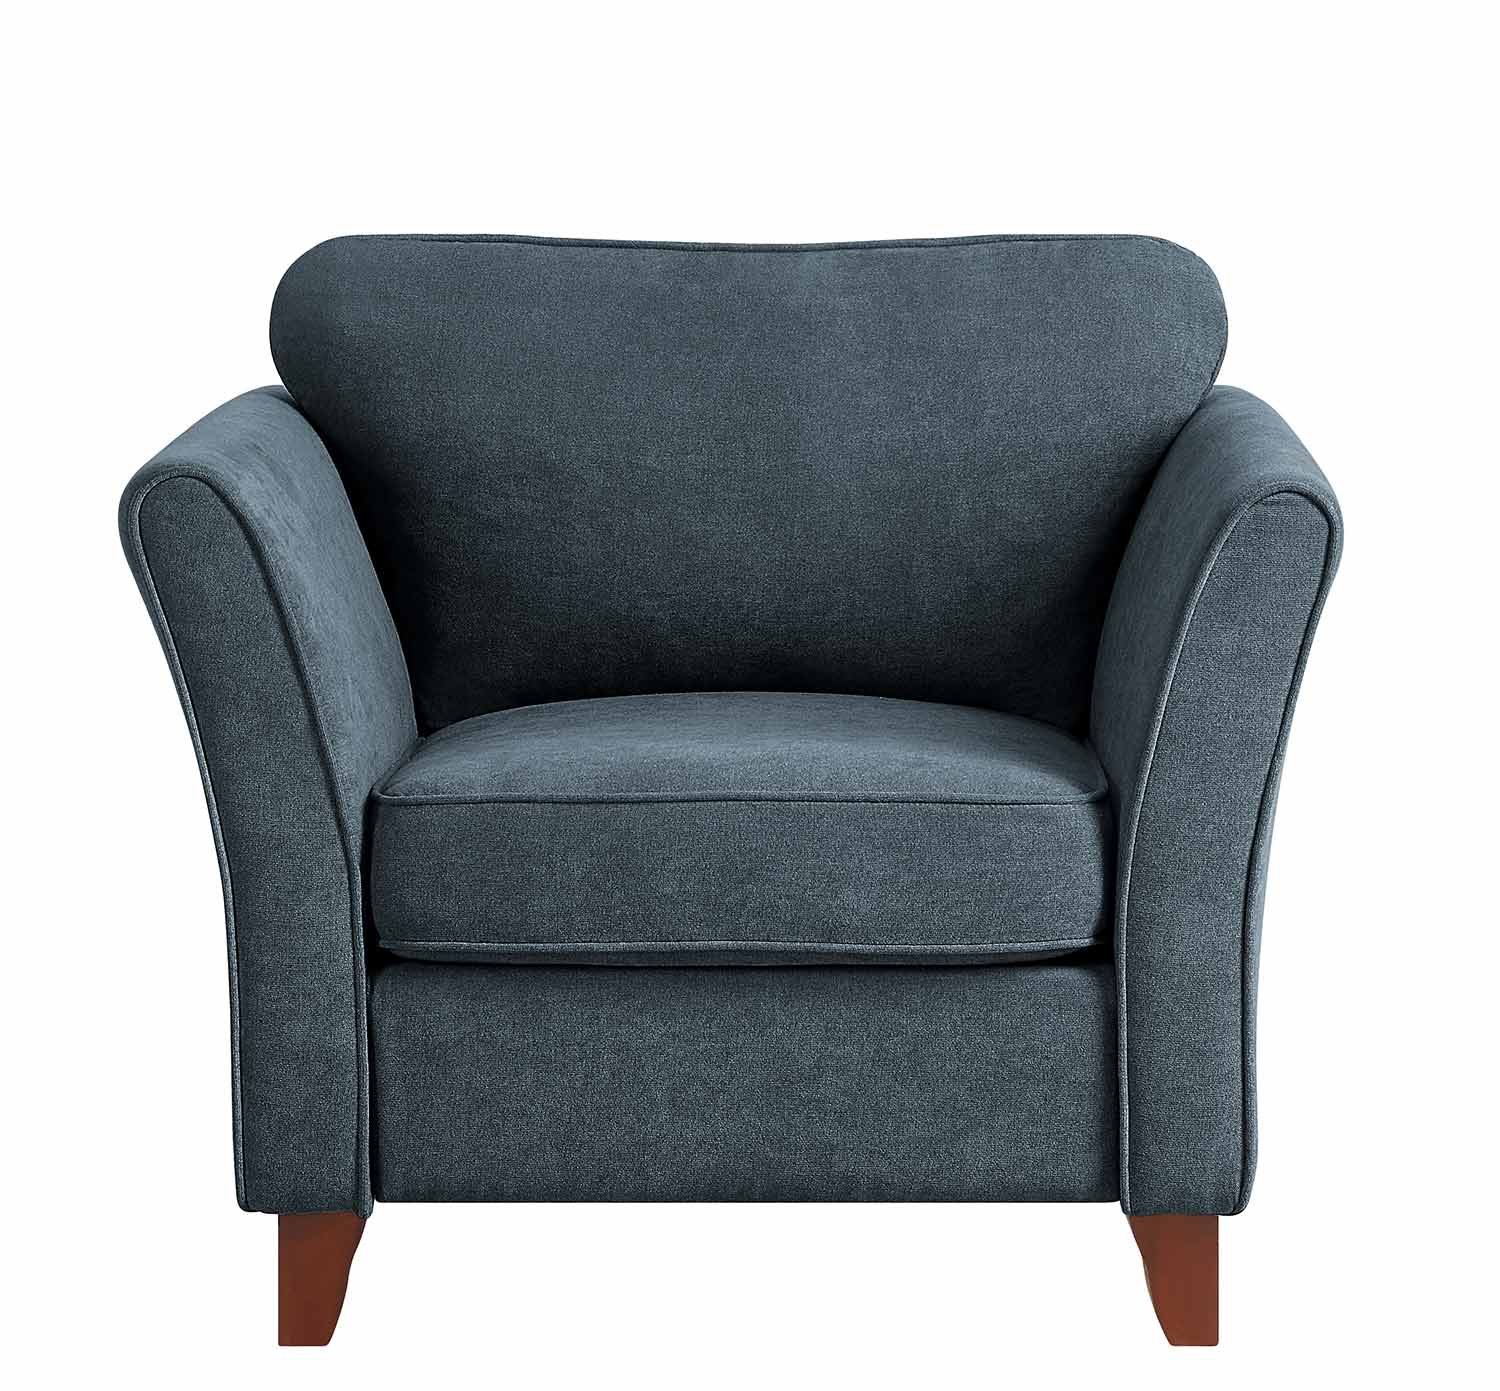 Homelegance Barberton Chair - Dark gray